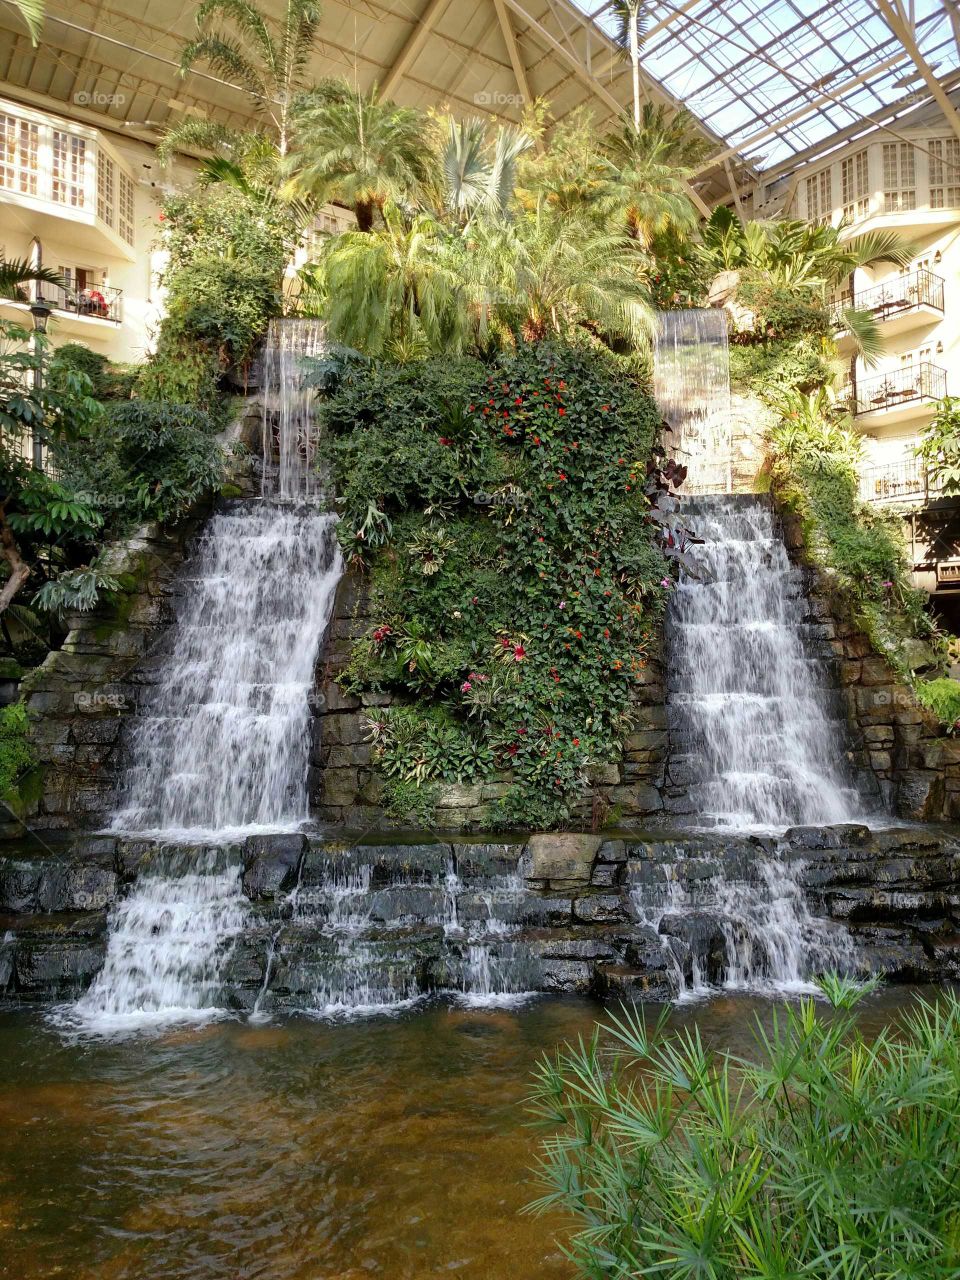 Dual waterfalls